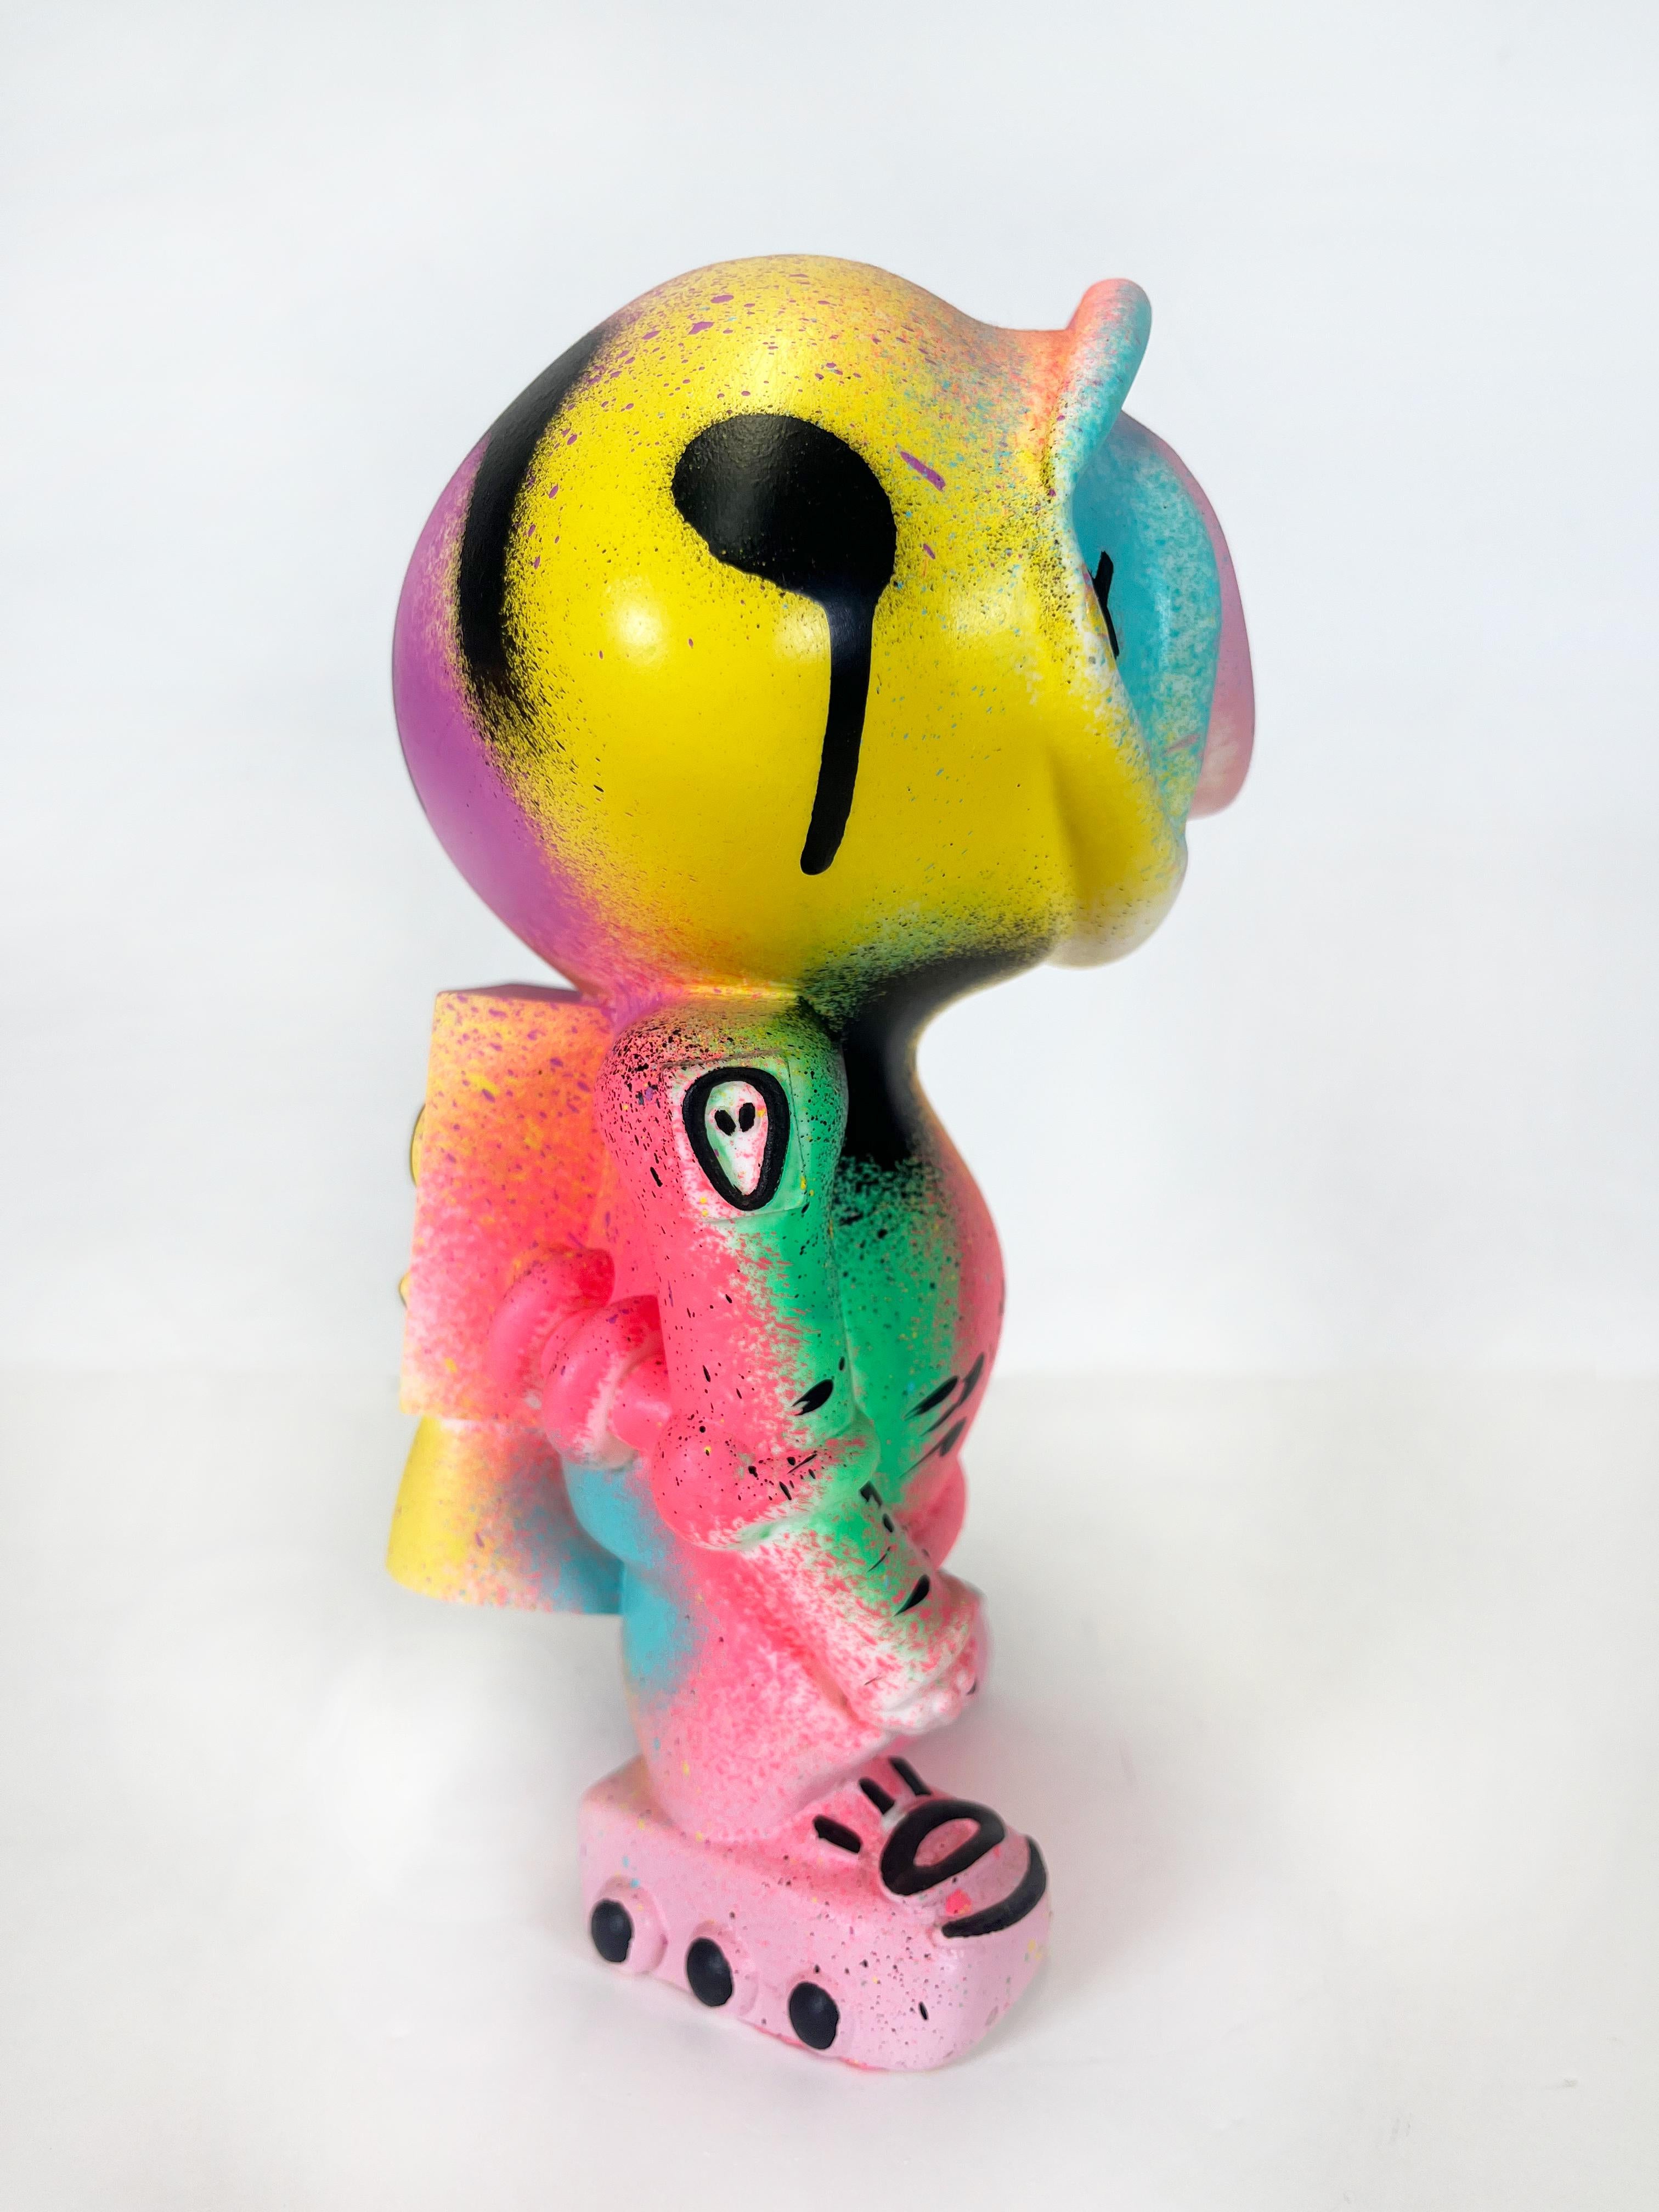 Technicolour Xeno v4, colorful and cool resin cast figure sculpture For Sale 1